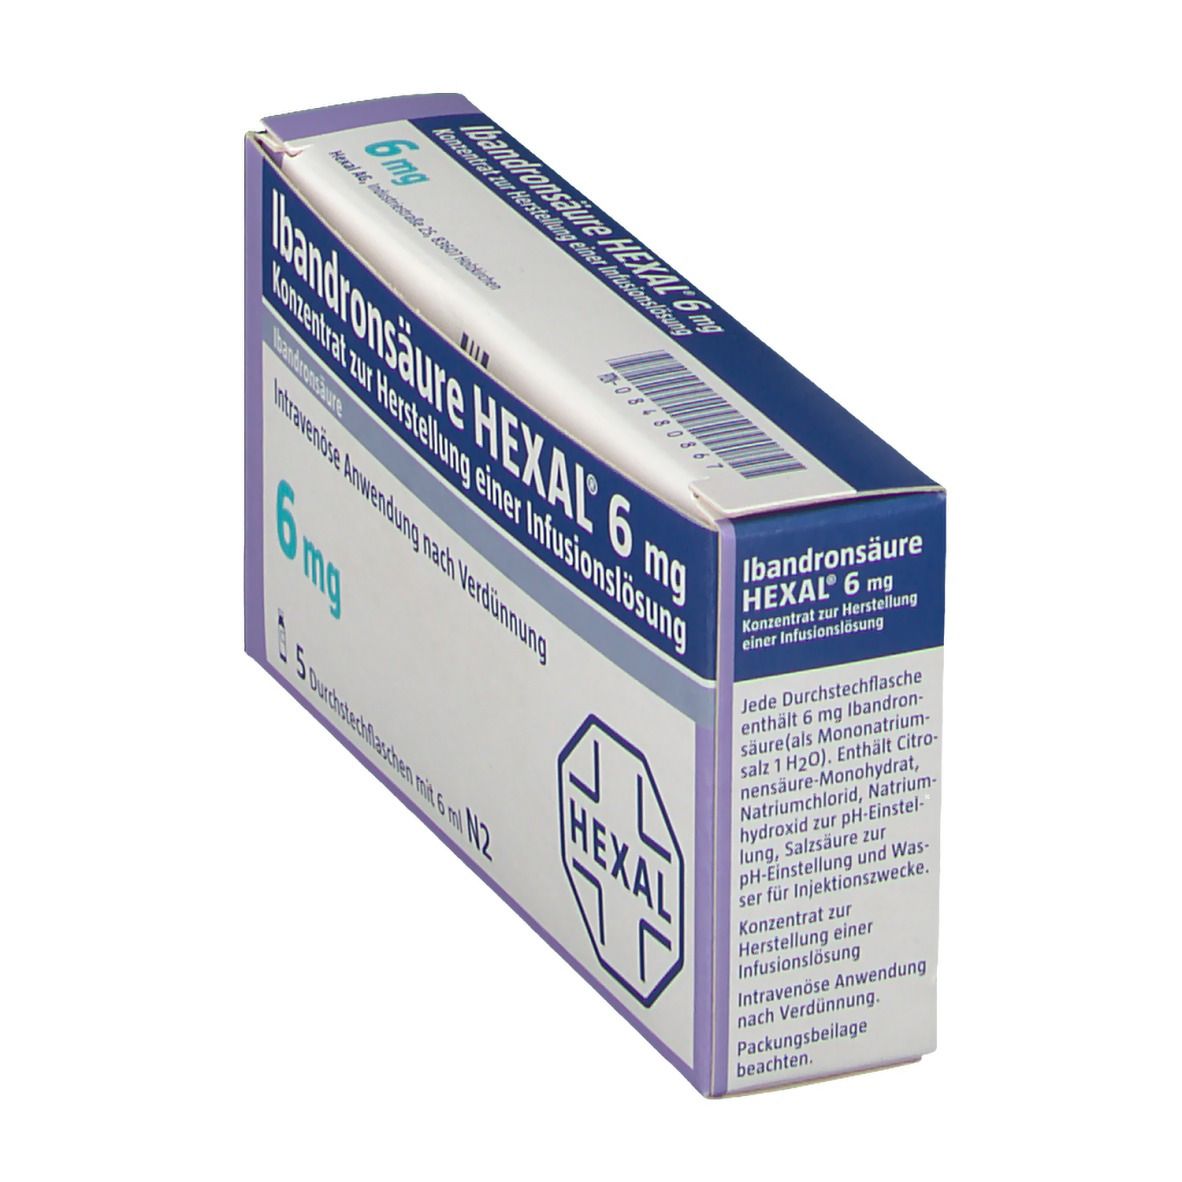 Ibandronsäure HEXAL® 6 mg